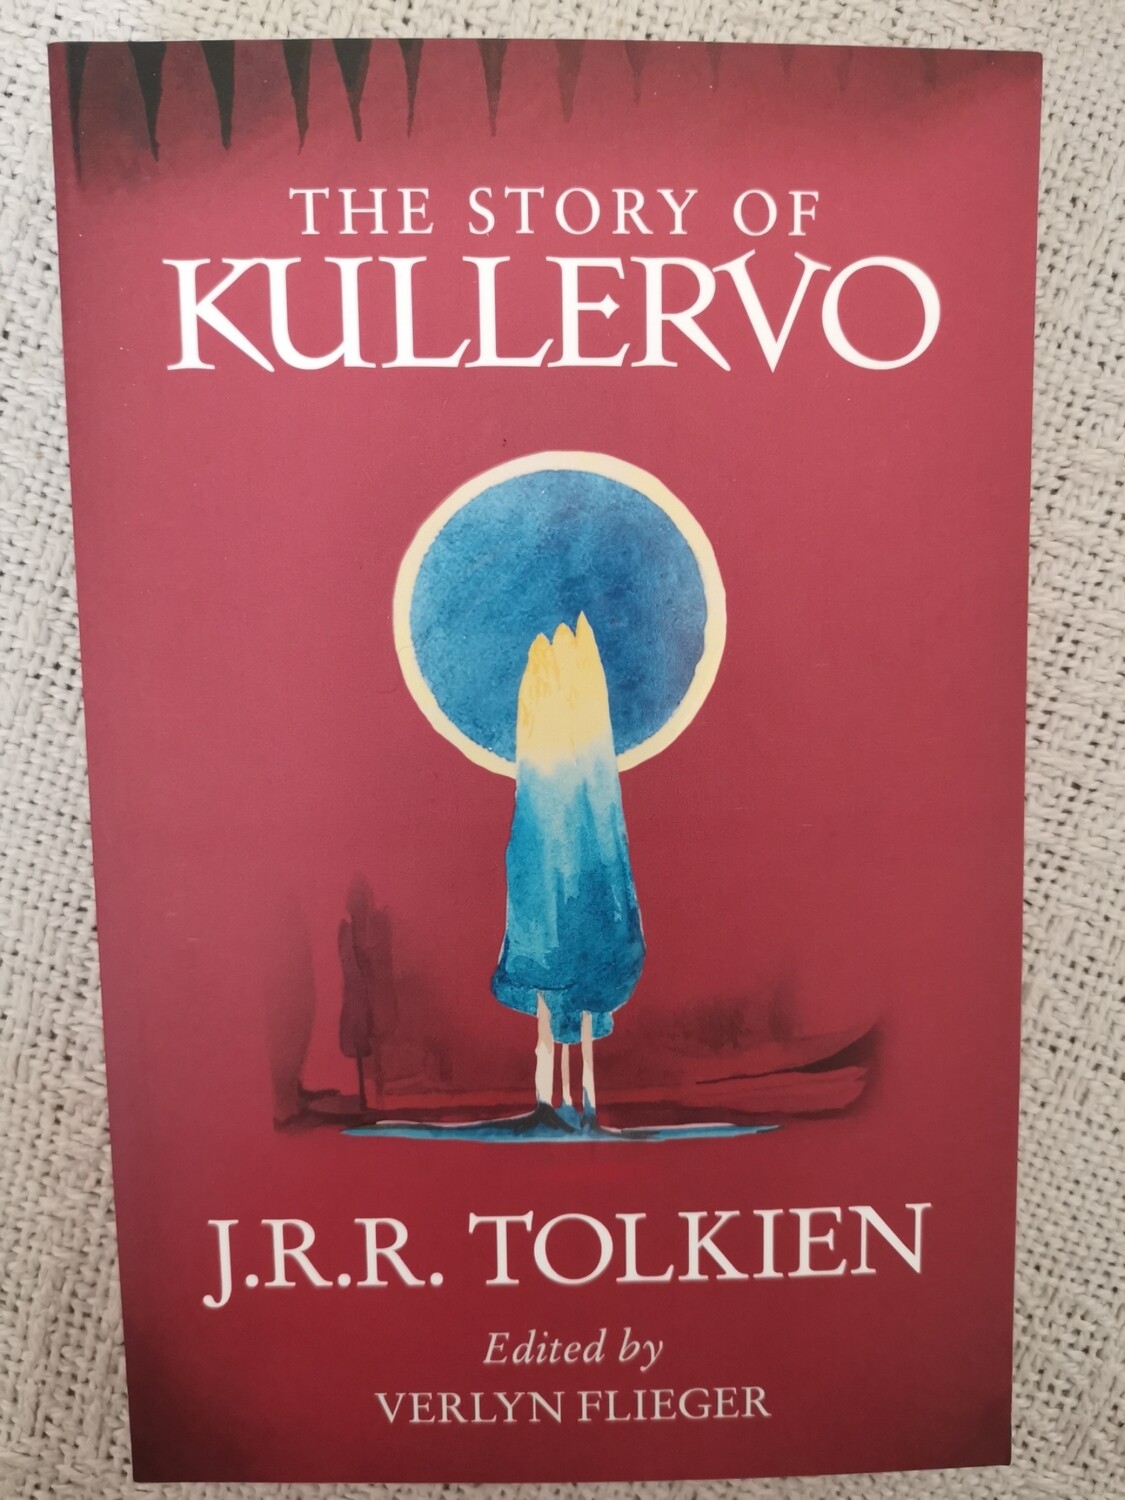 The story of Kullervo, J. R. R. Tolkien